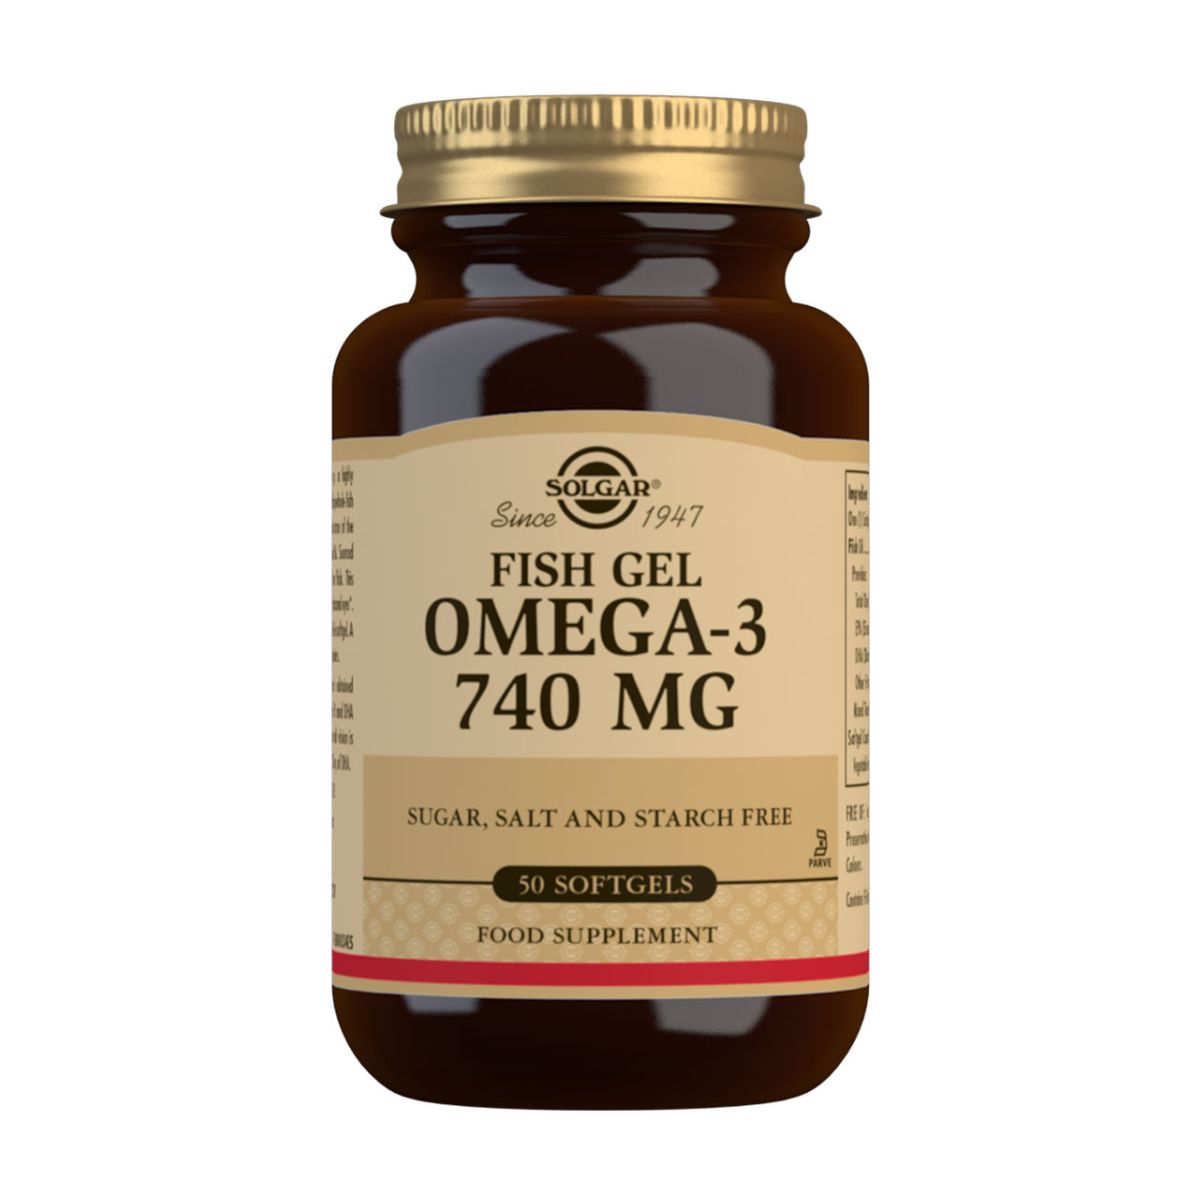 Gel de Pescado Omega 3 – 740 mg – 50 Cápsulas Blandas